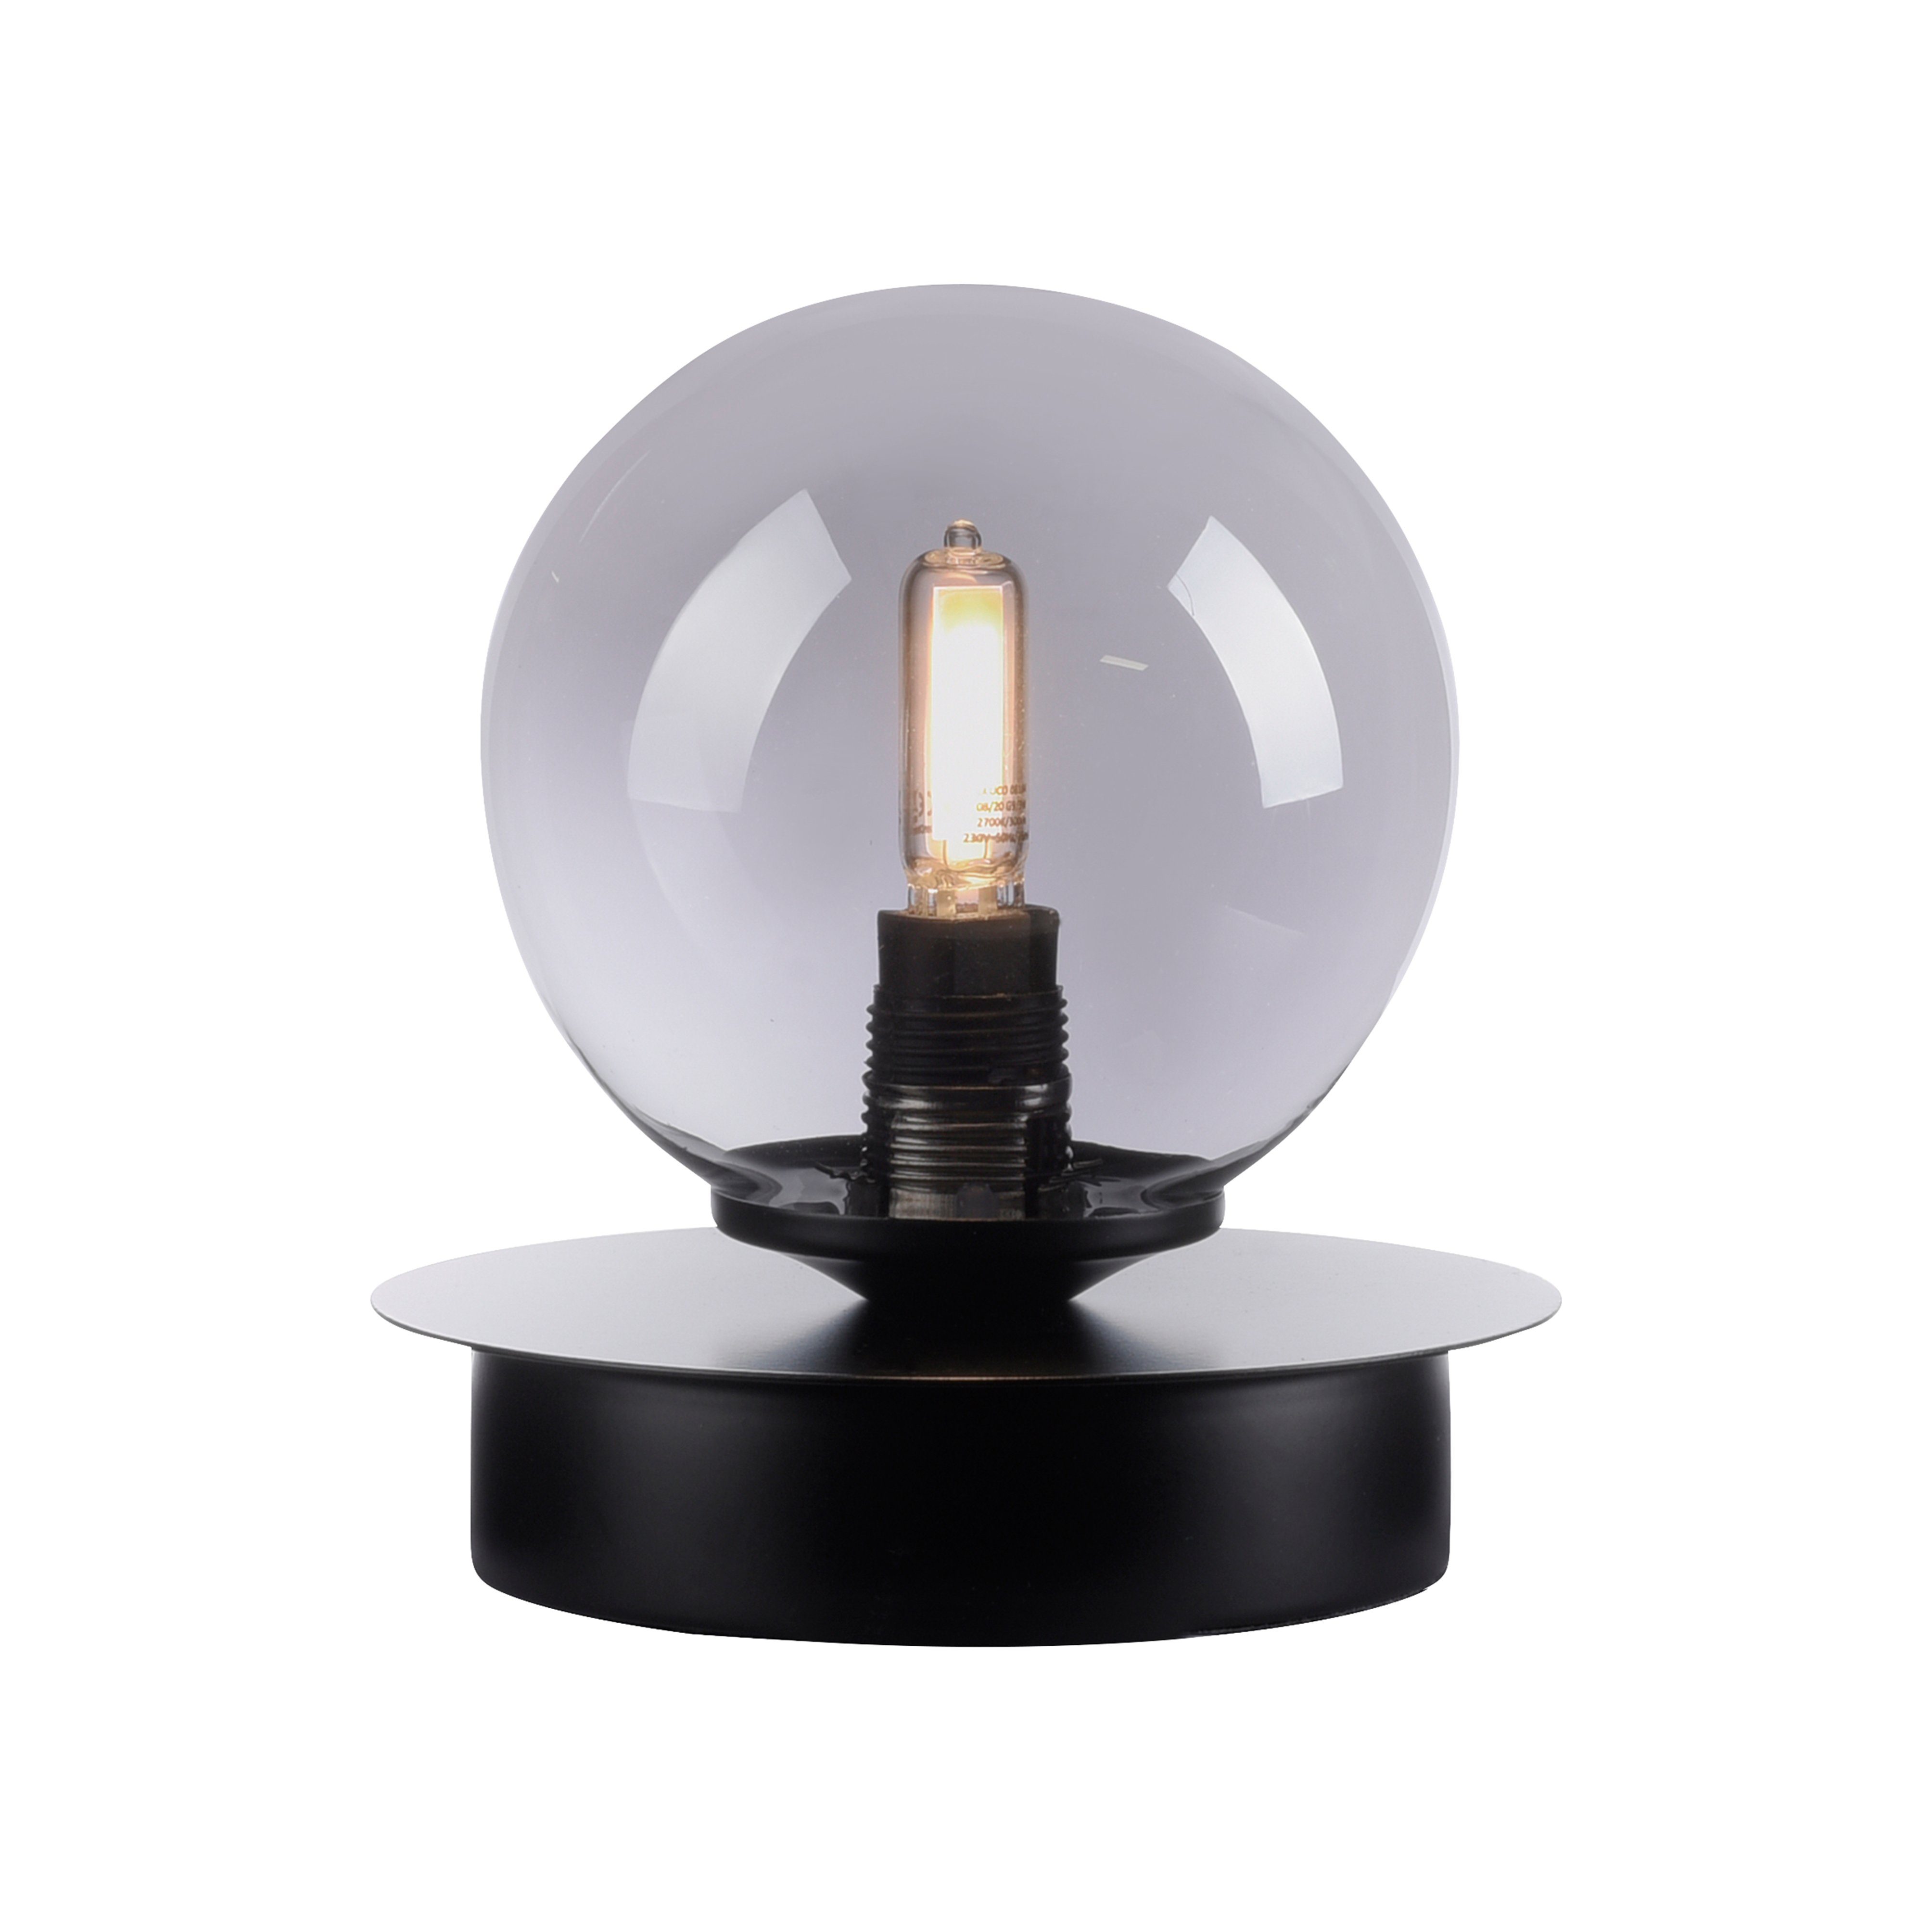 LED WIDOW, Paul Nachttischlampe Warmweiß, wechselbar, LED Schalter, Neuhaus Schnurschalter